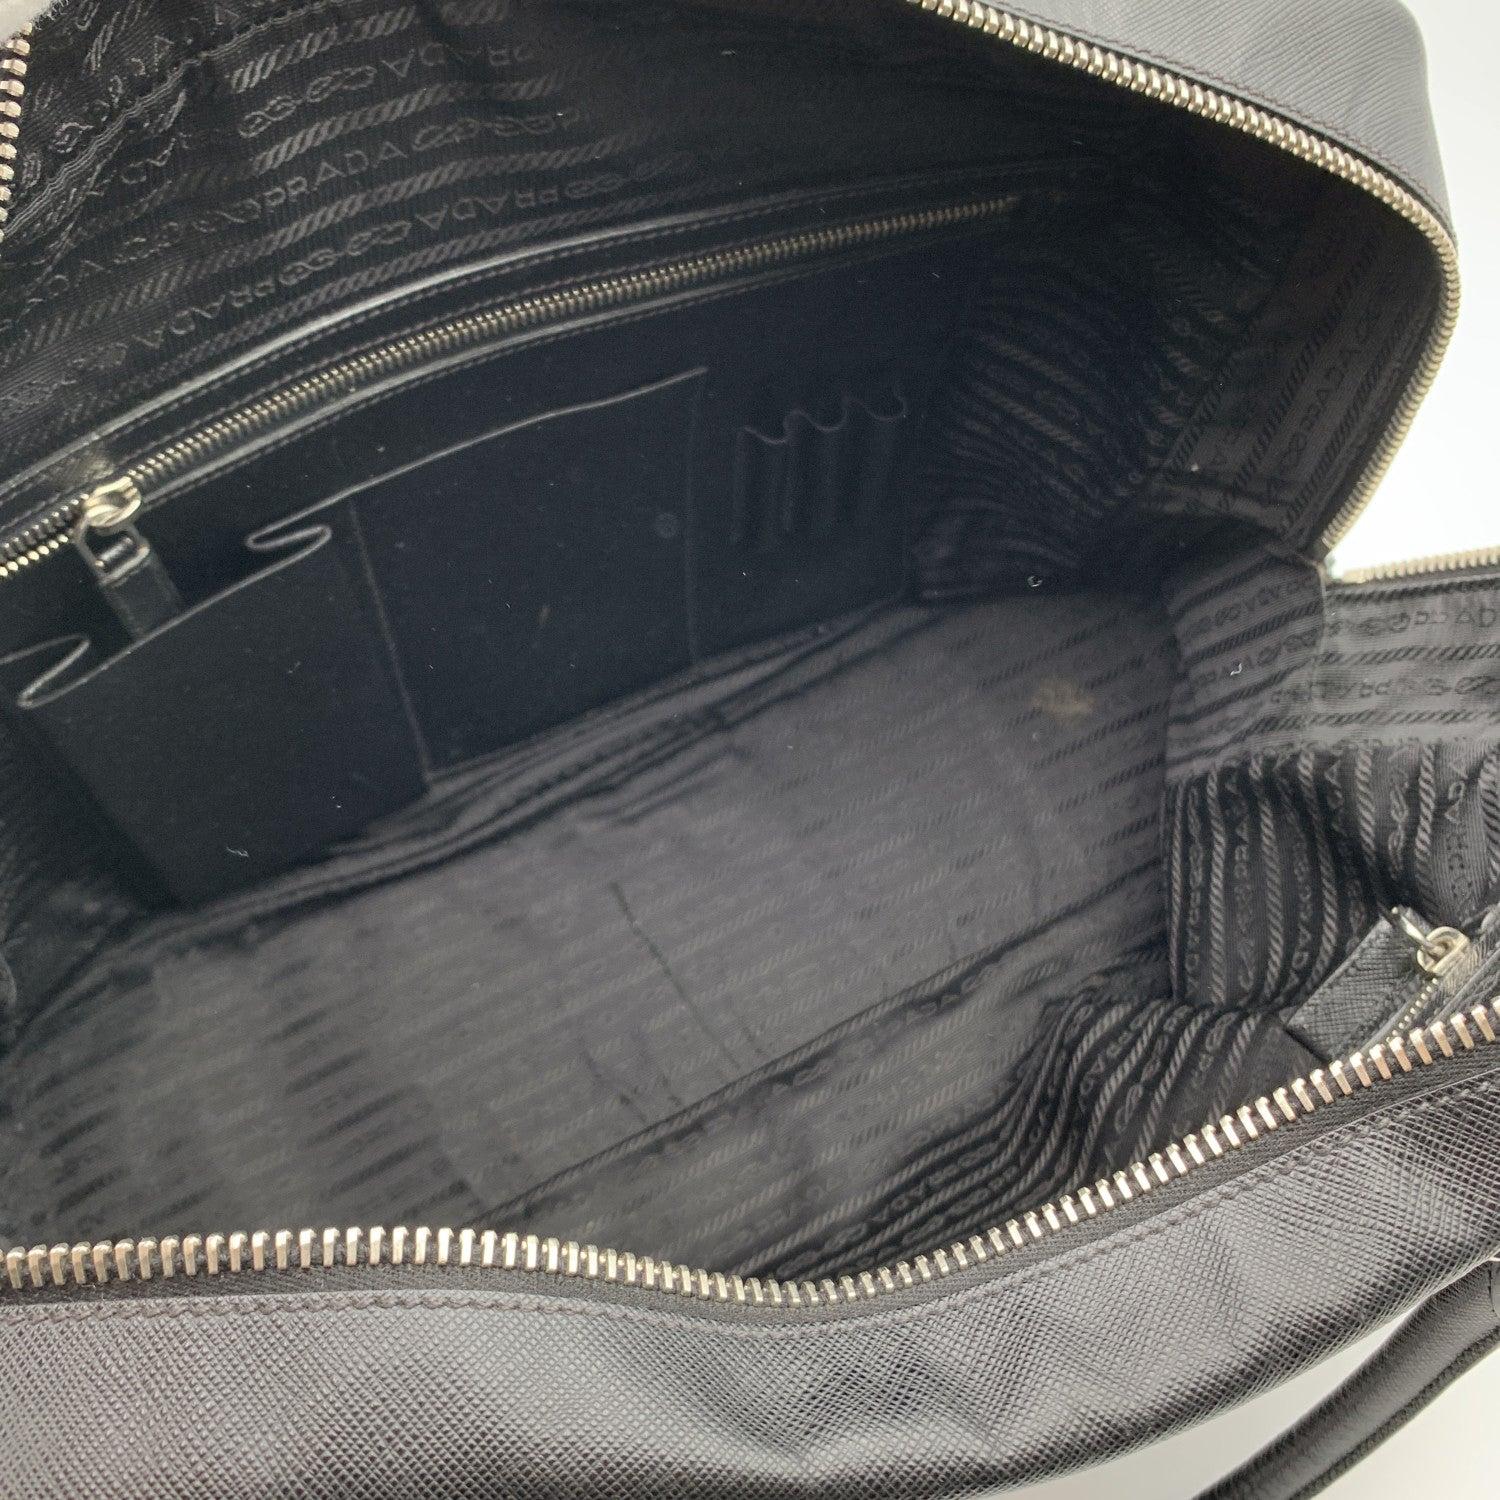 Prada Black Saffiano Leather Briefcase Satchel Zip Top Work Bag 1